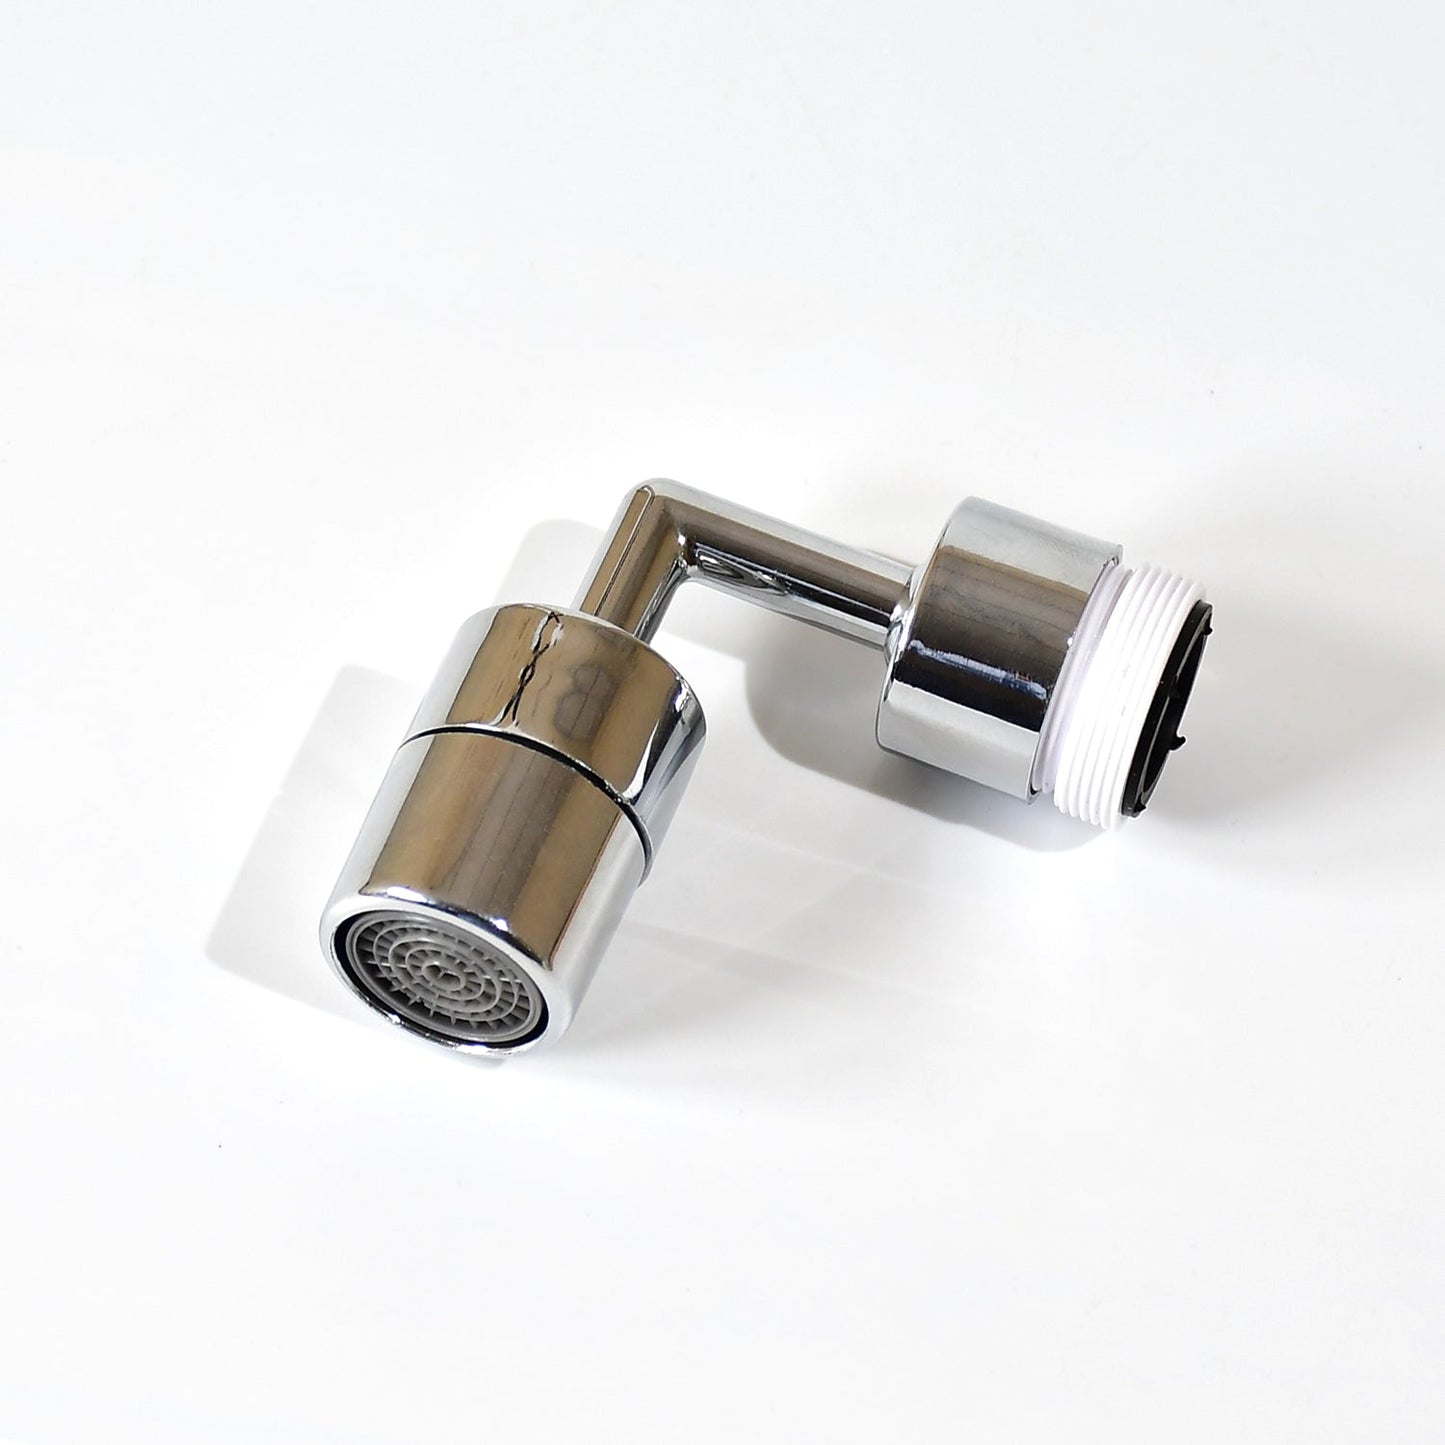 9089B Splash Filter Faucet, Sink Faucet Sprayer Head Suitable for  Kitchen Bathroom Faucet with color box DeoDap